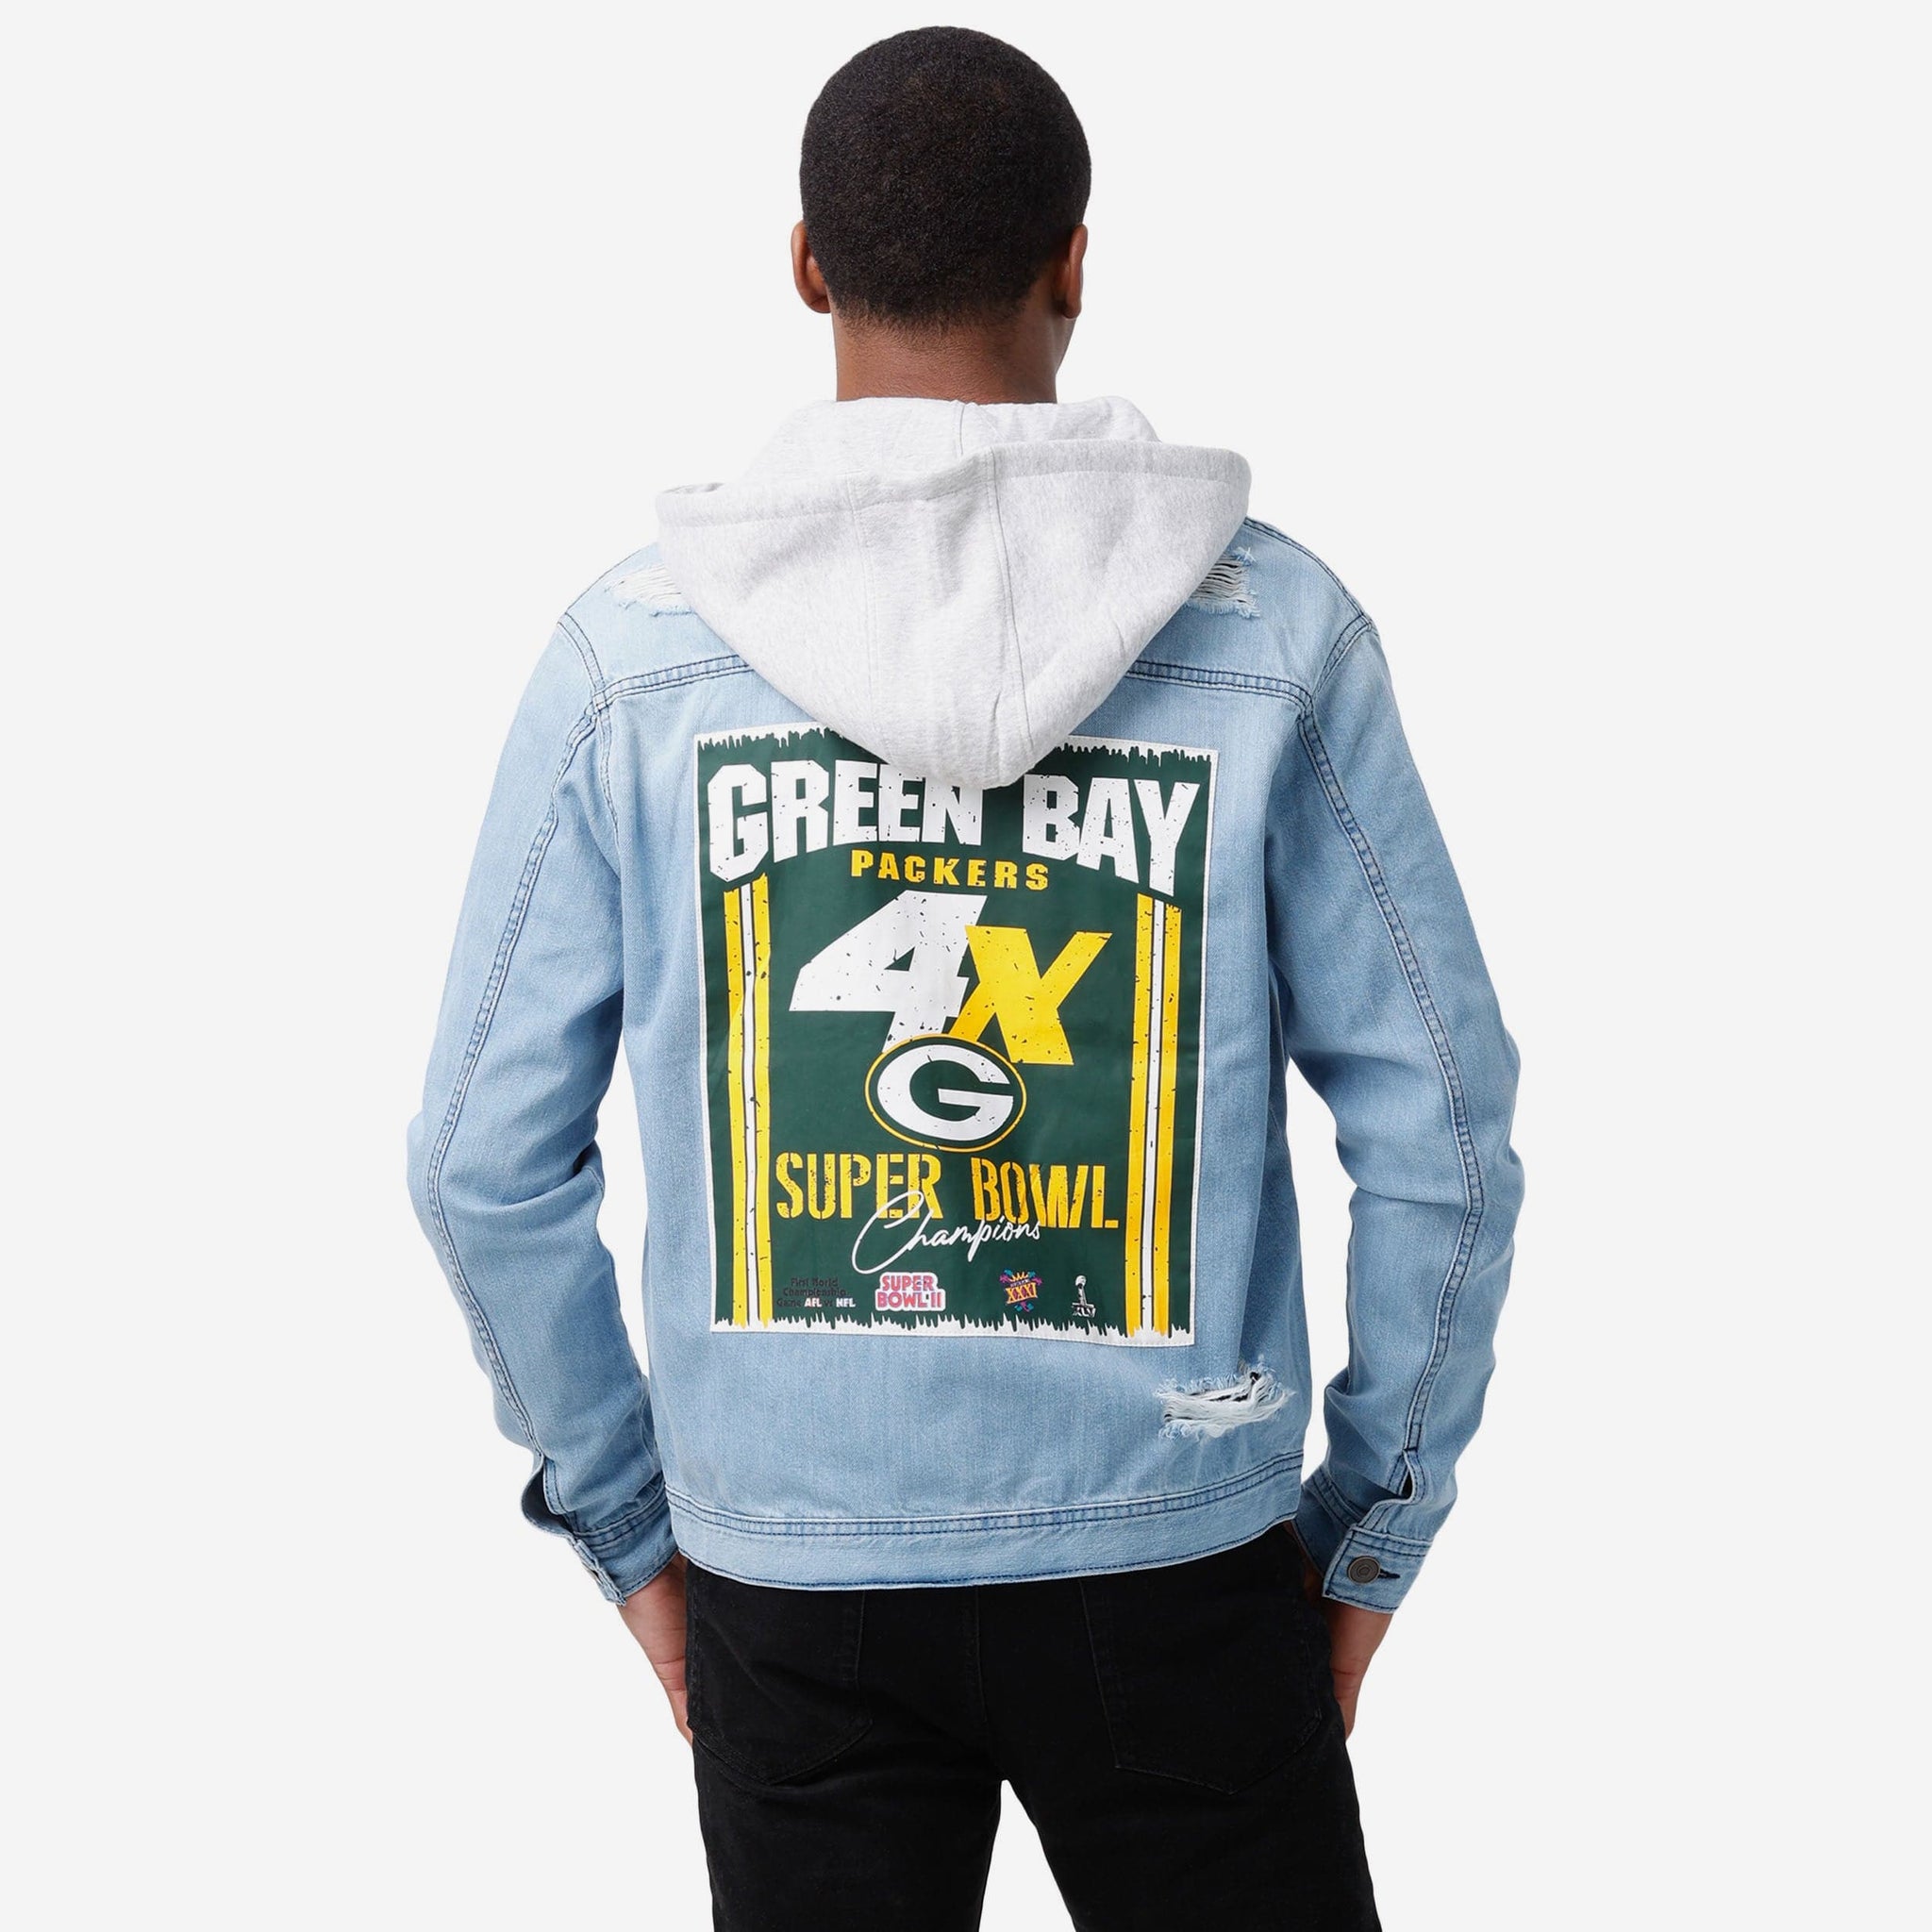 Green Bay Packers Denim Days Jacket